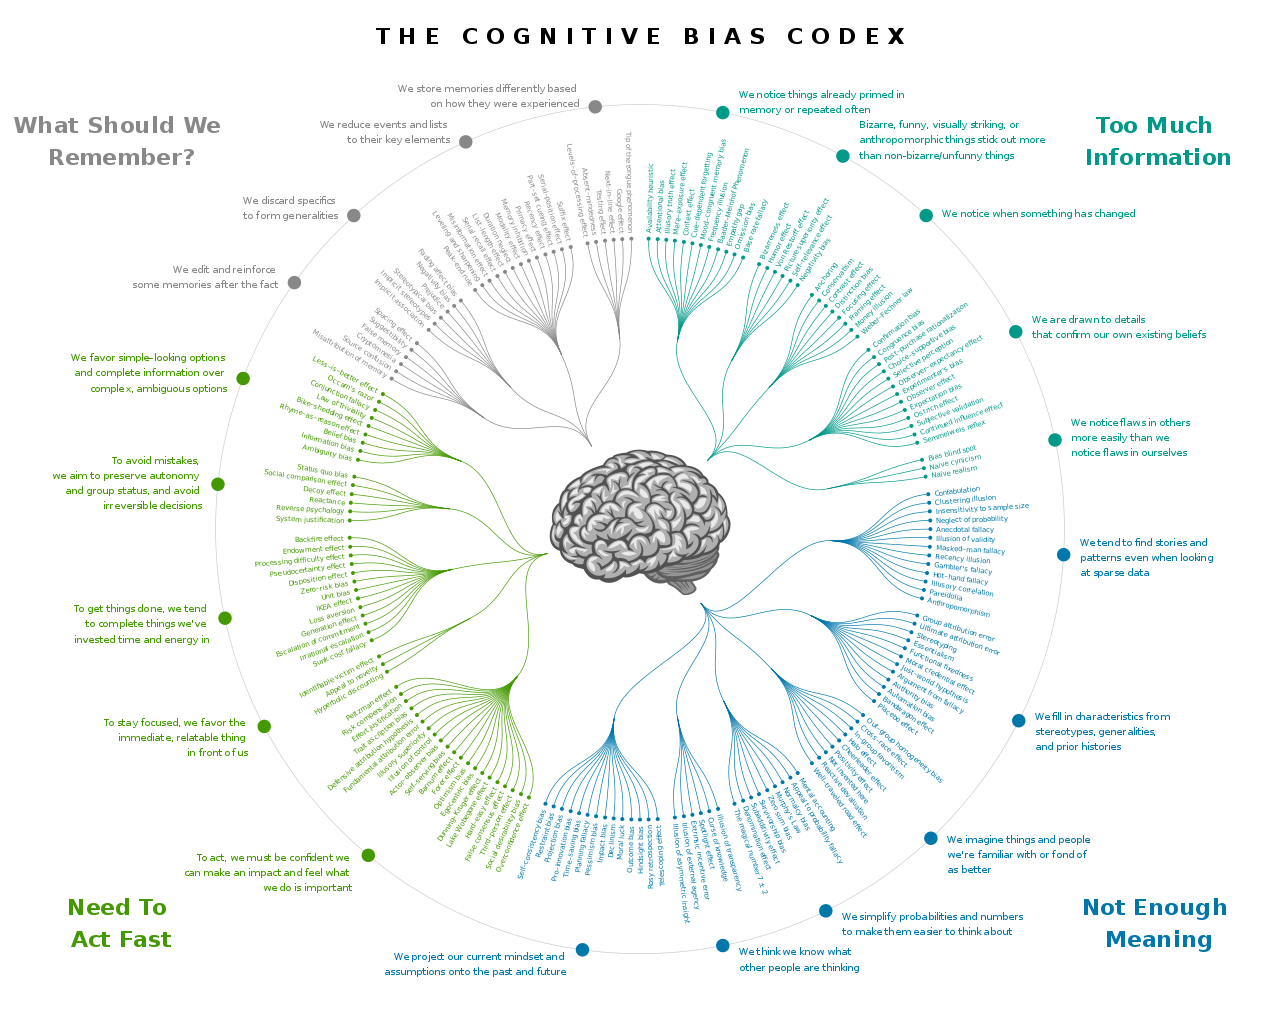 Cognitive bias codex